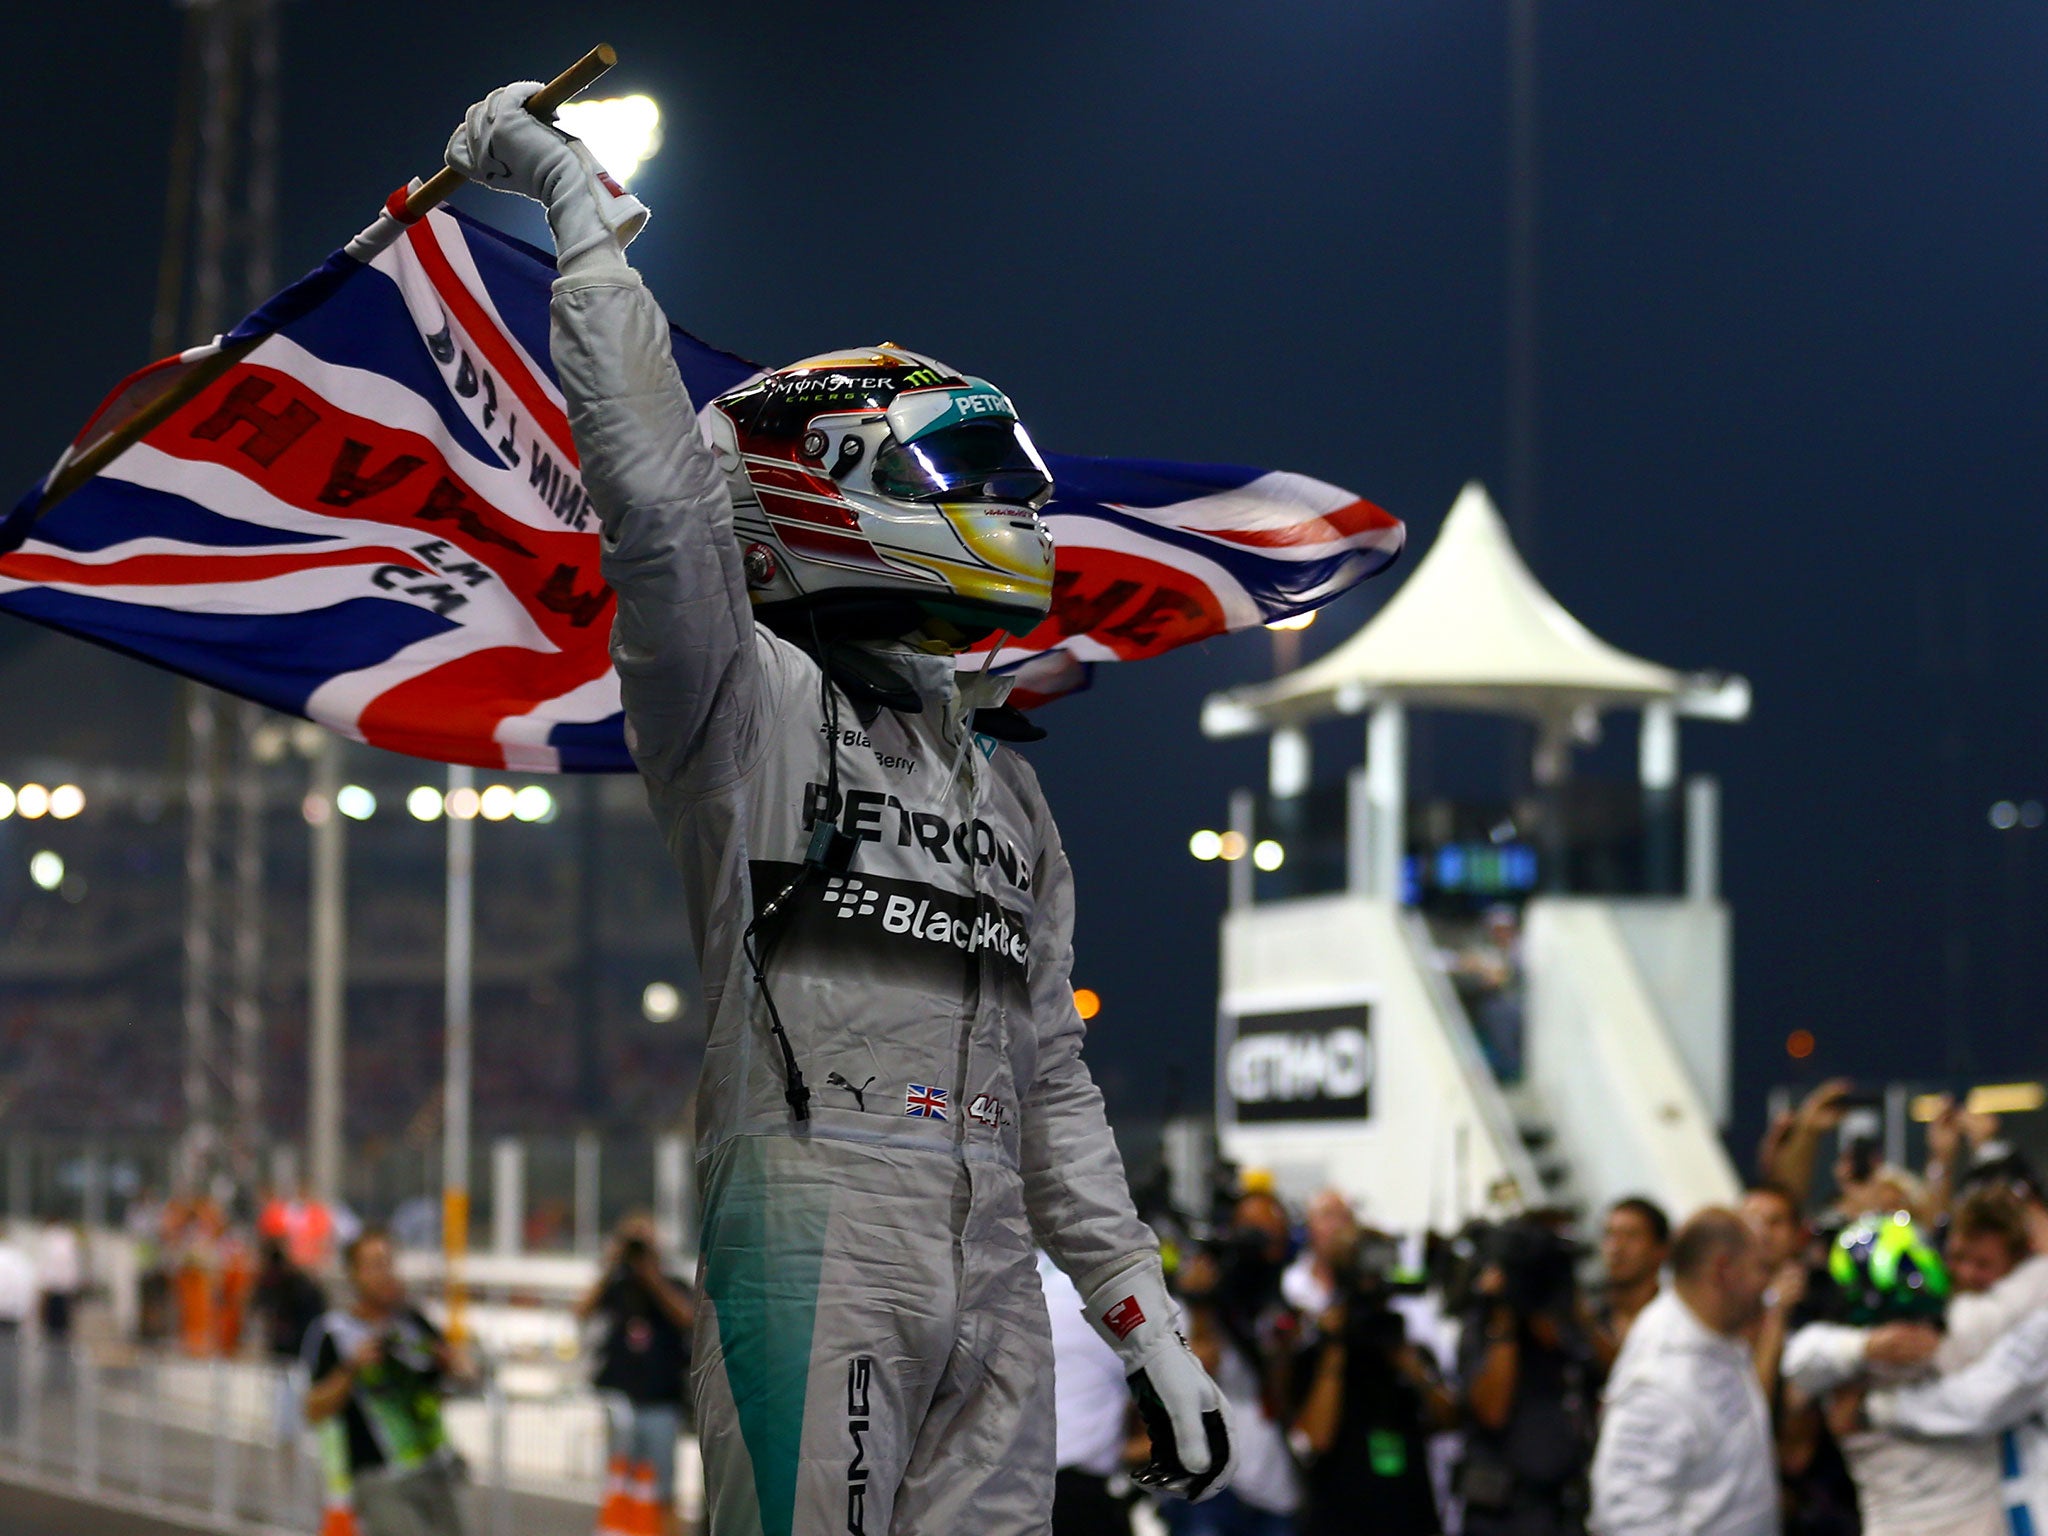 Lewis Hamilton celebrates winning the 2014 F1 world championship